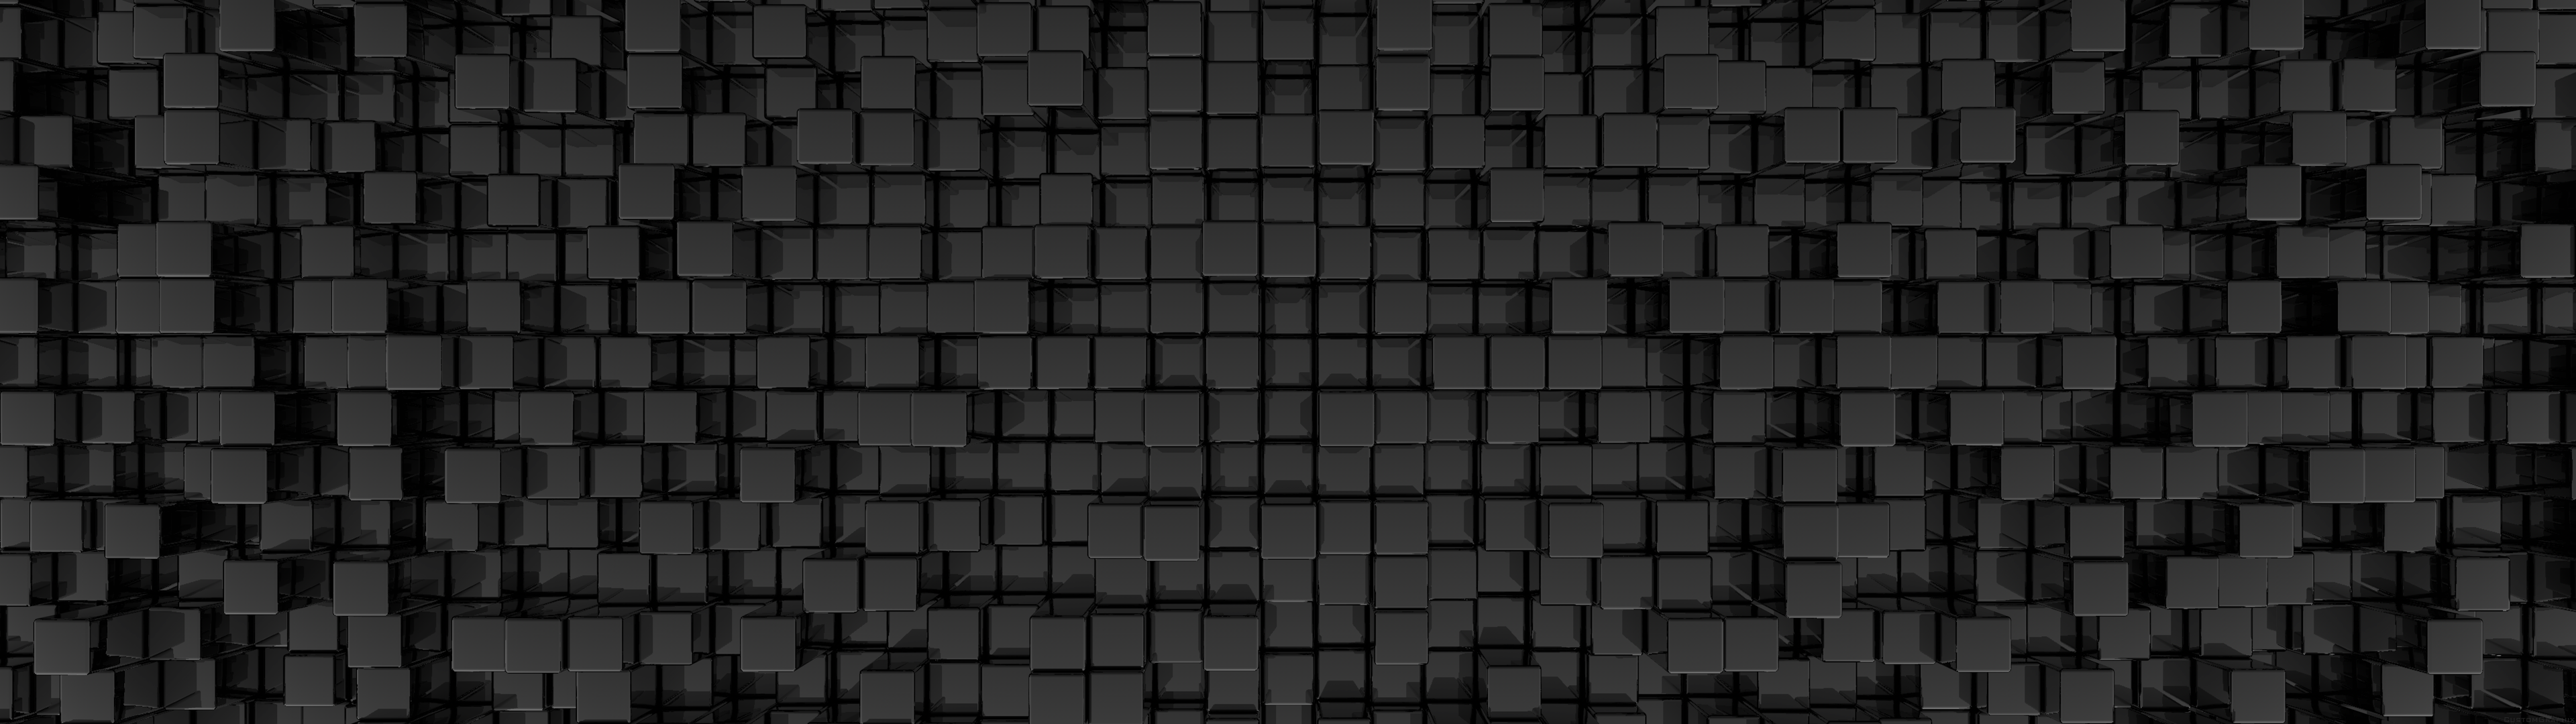 c4d abstract box wallpaper by xcustomgraphix customization wallpaper